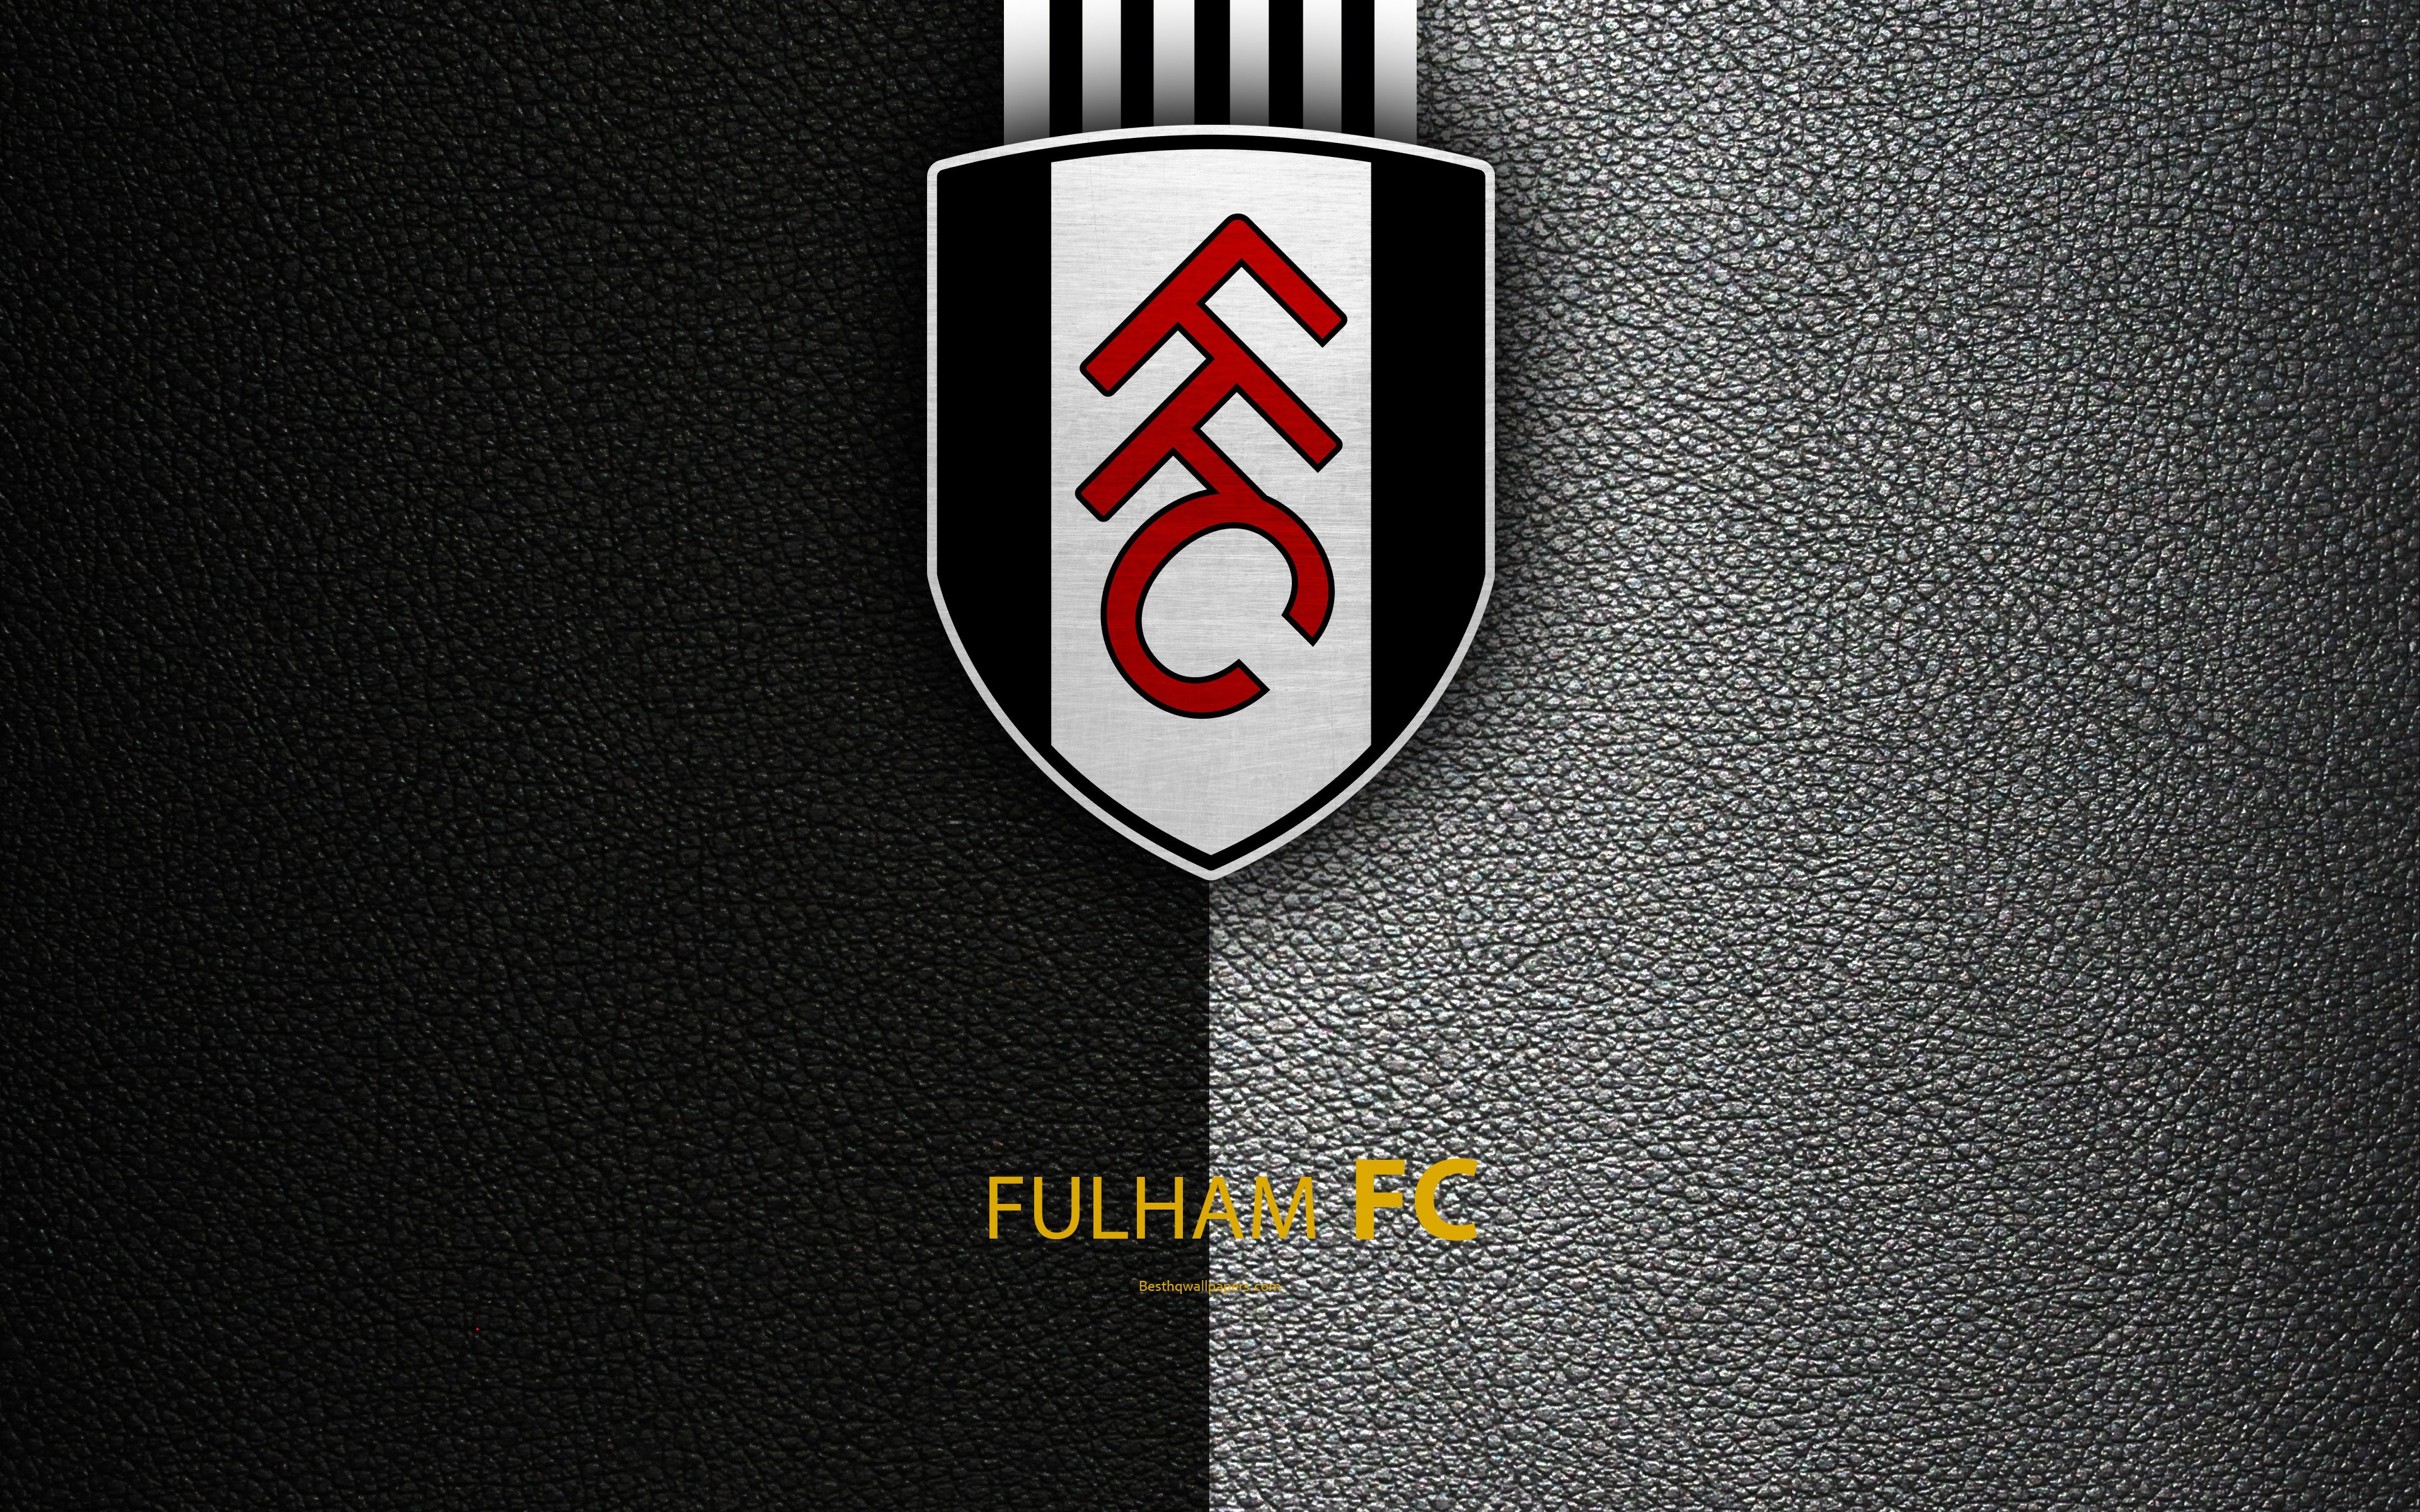 Download wallpaper Fulham FC, 4K, English football club, logo